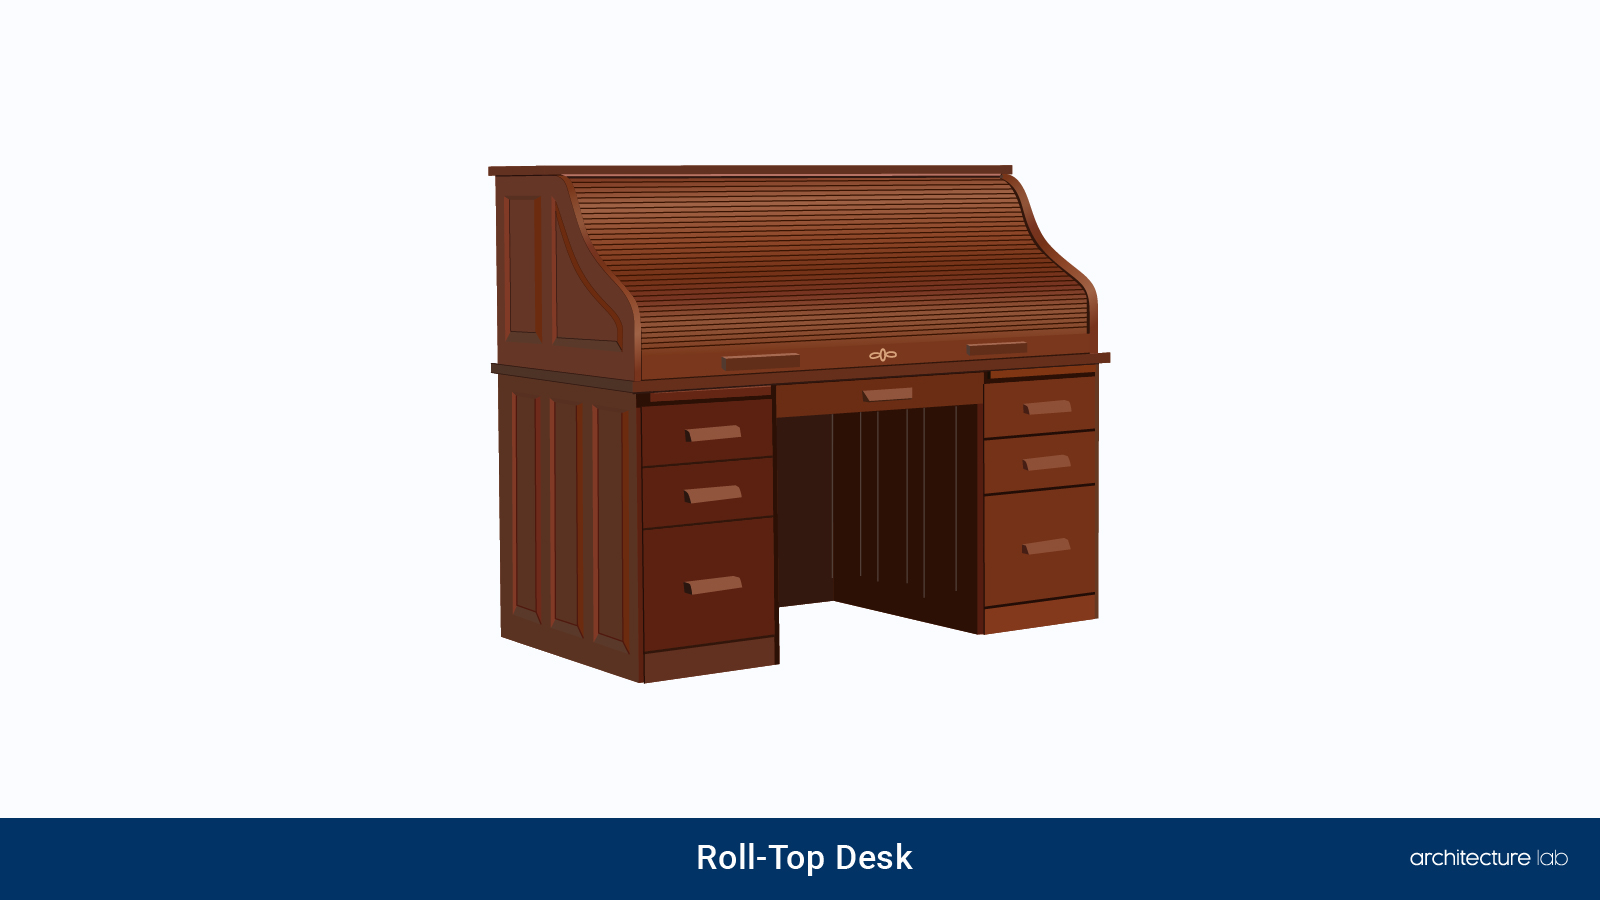 8. Roll-top desk